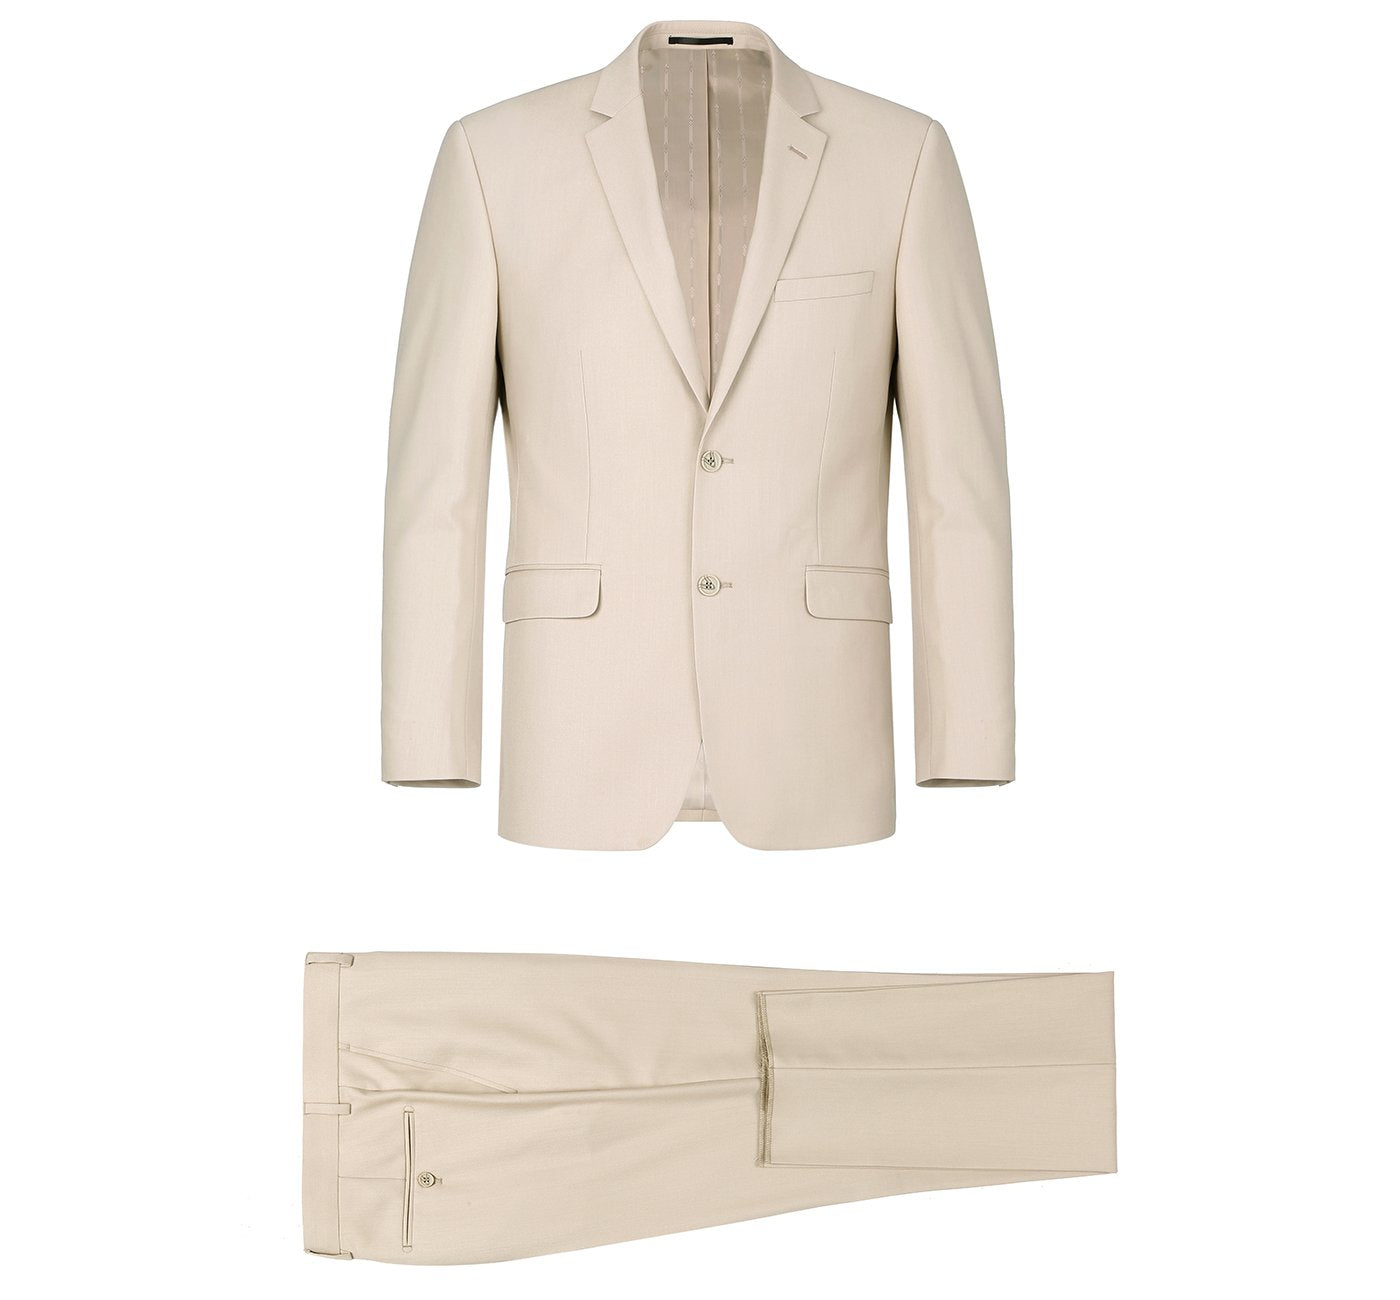 201-3 Men's Beige 2-Piece Single Breasted Notch Lapel Suit